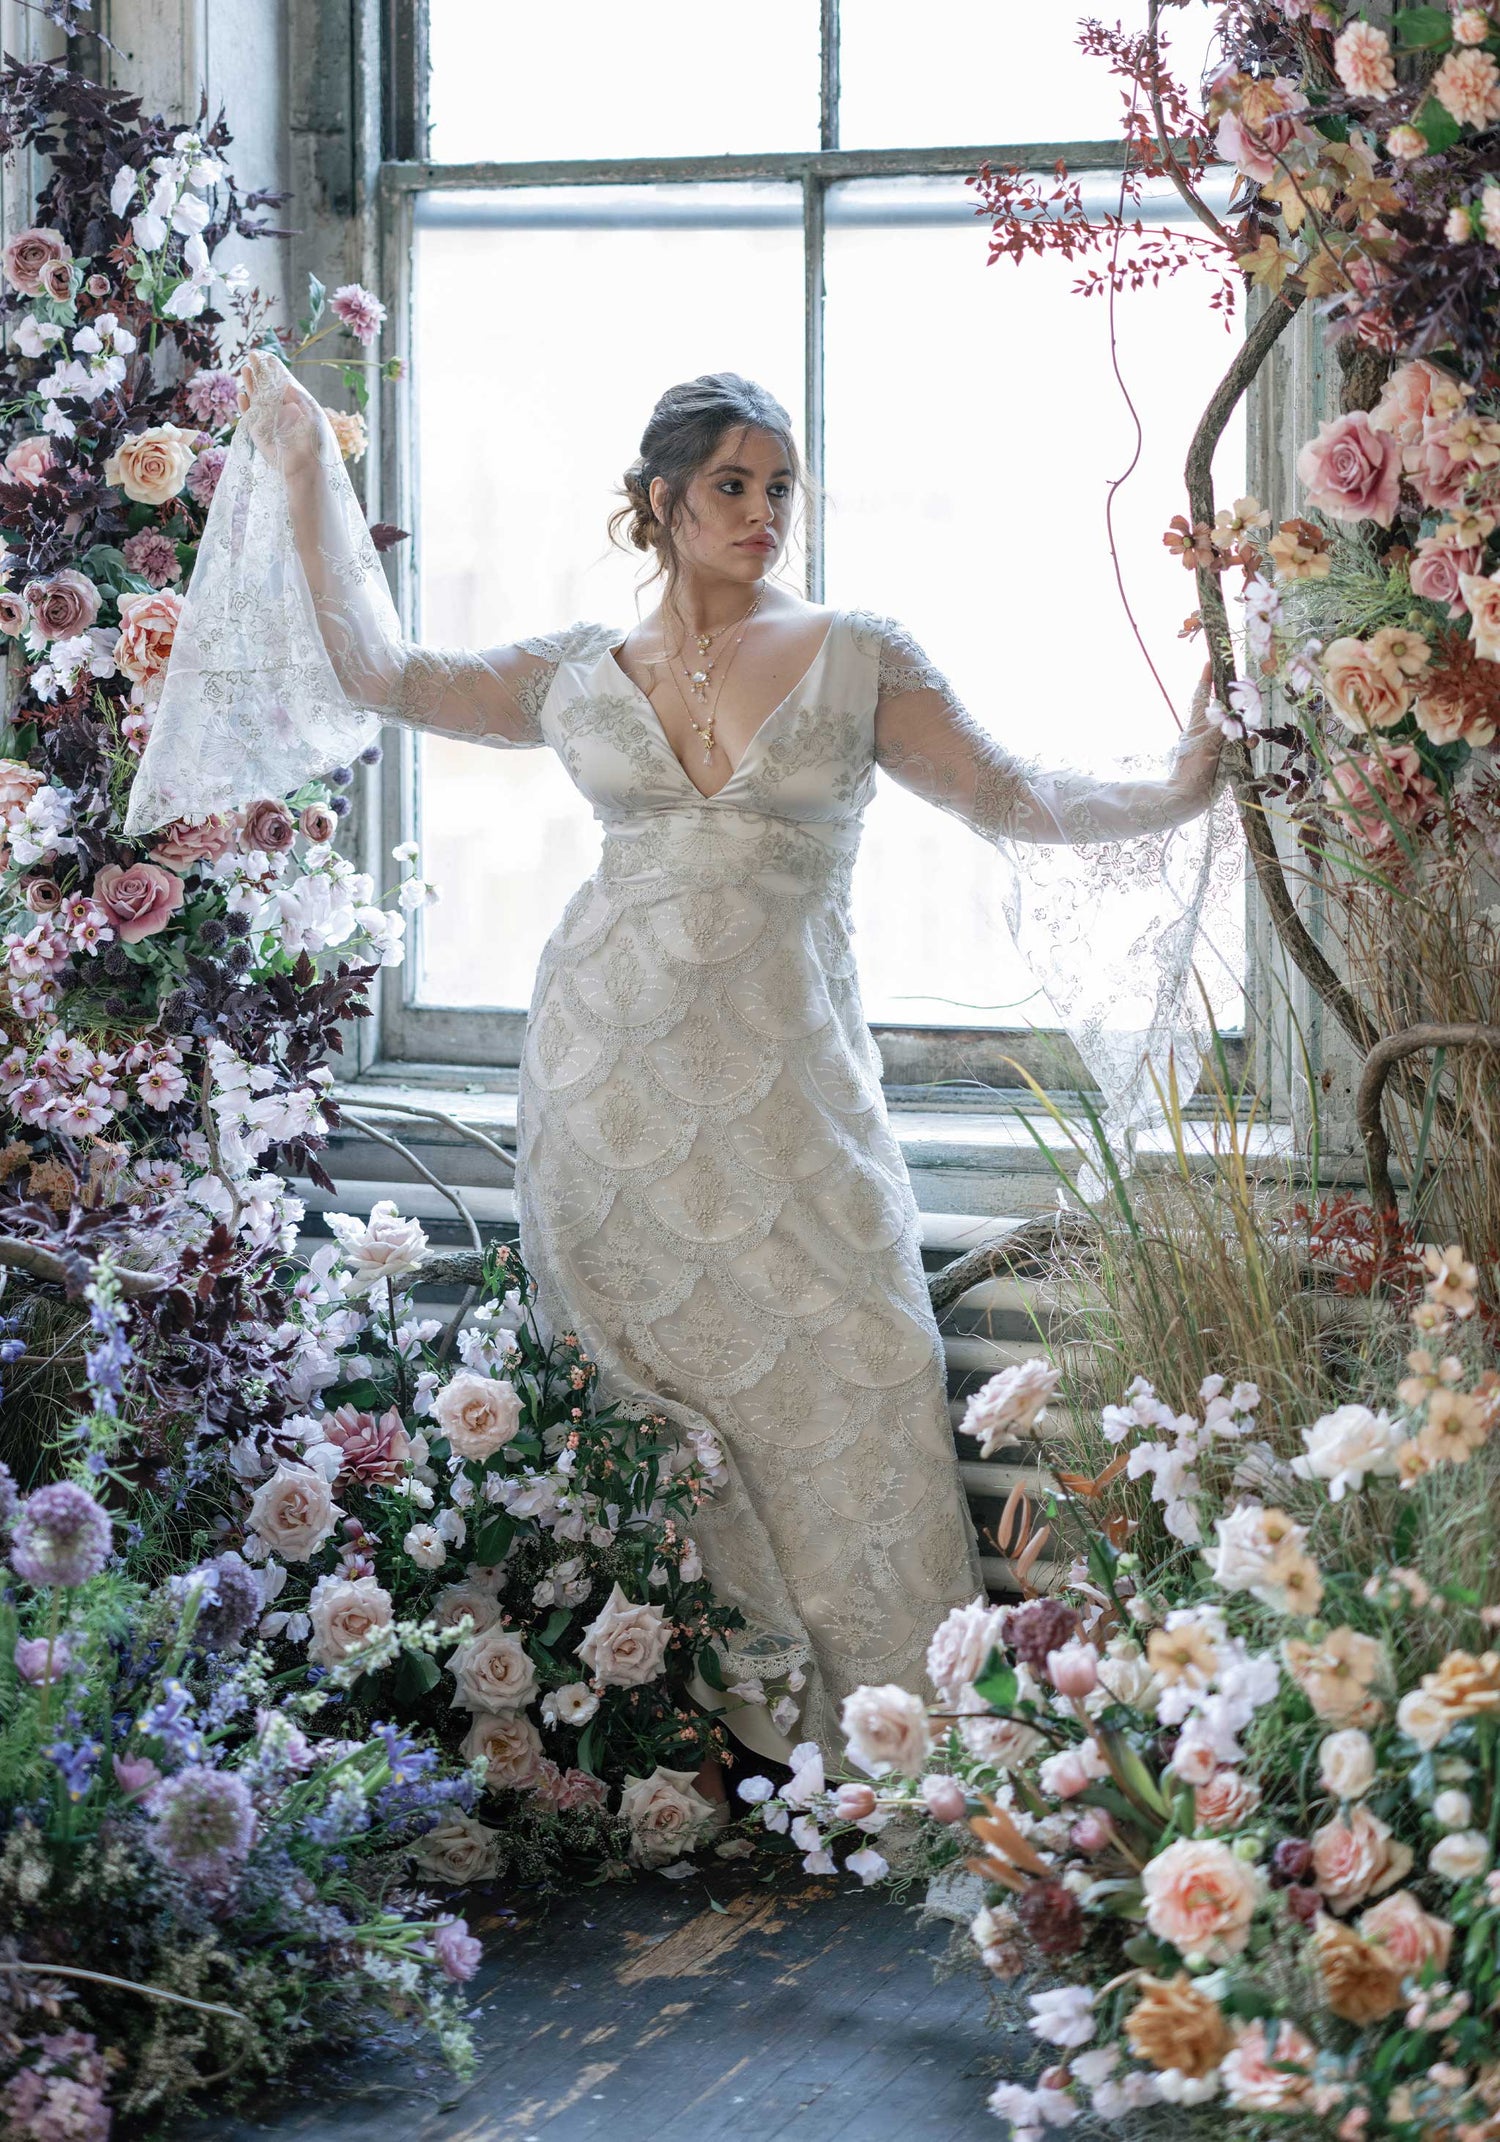 Filigree Gold Lace Embroidered Designer Wedding Dress Claire Pettibone